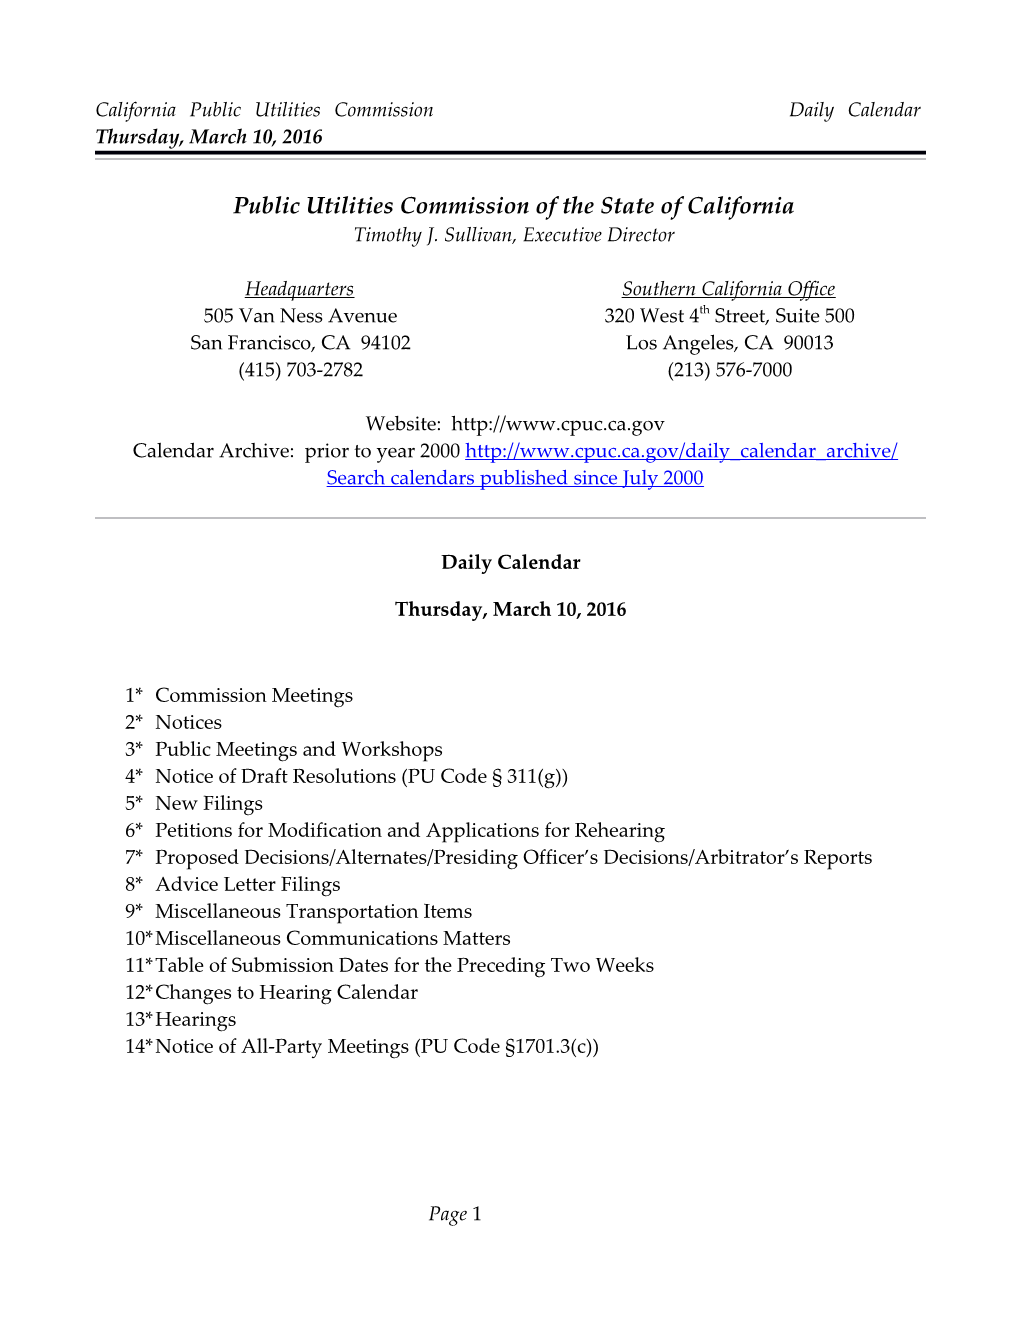 California Public Utilities Commission Daily Calendar Thursday, March 10, 2016